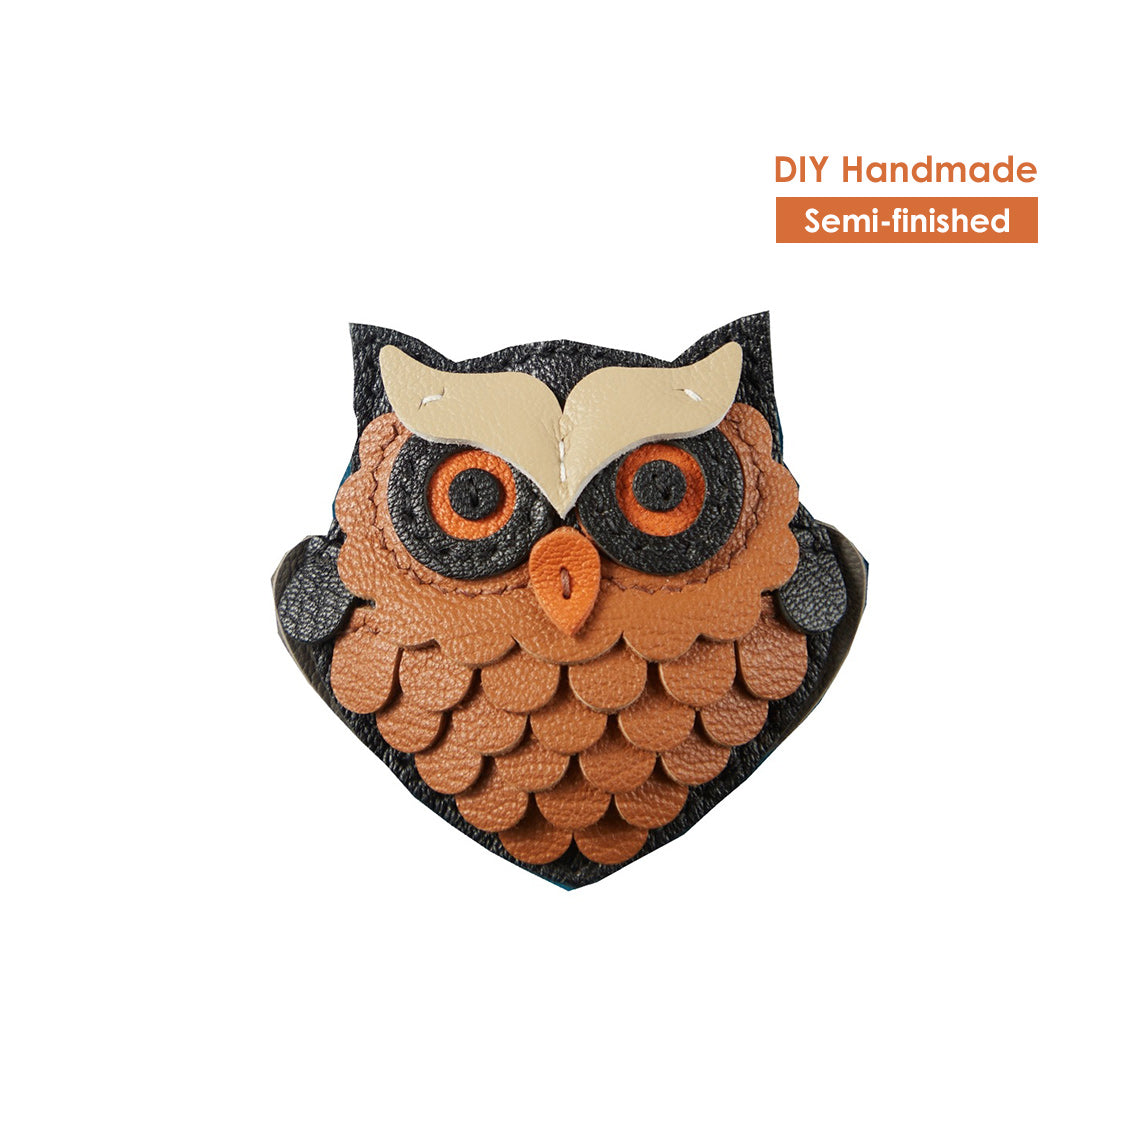 POPSEWING® Sheep Leather Flaco Owl Keychain DIY Kits